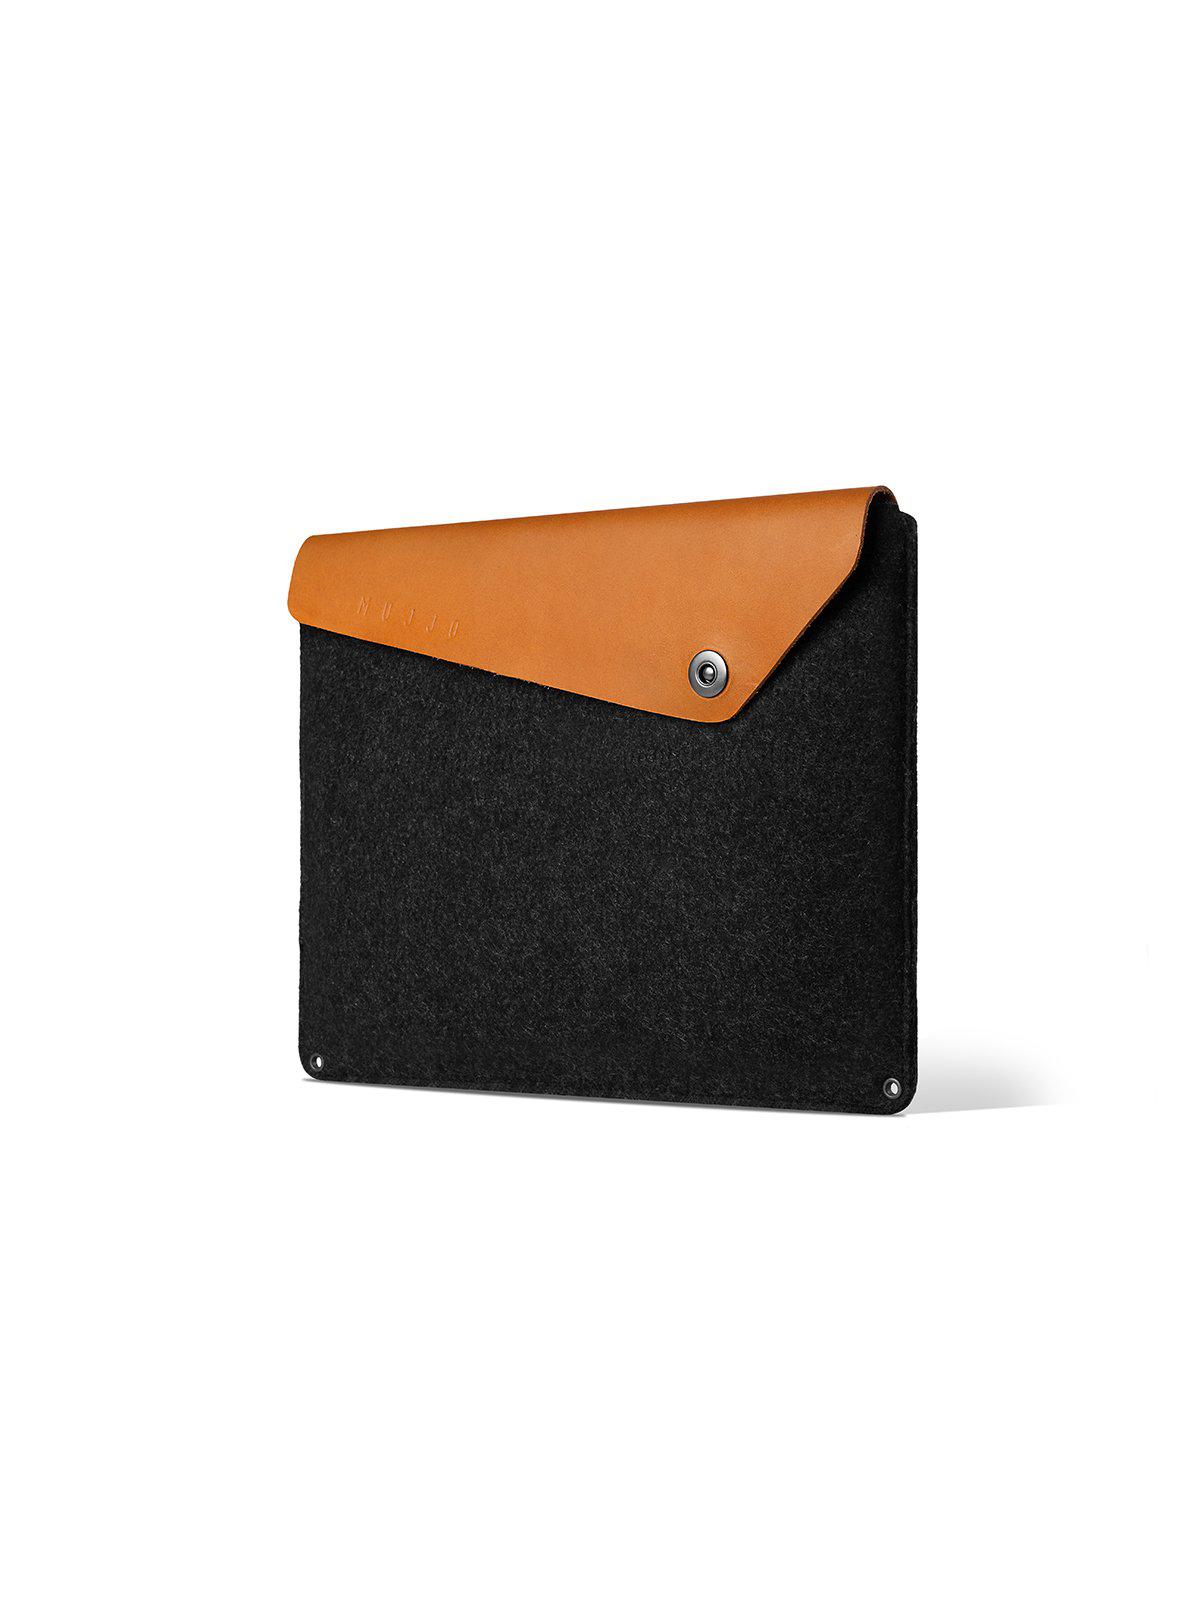 Mujjo Laptop Sleeve for Macbook Pro 16 Inch Tan